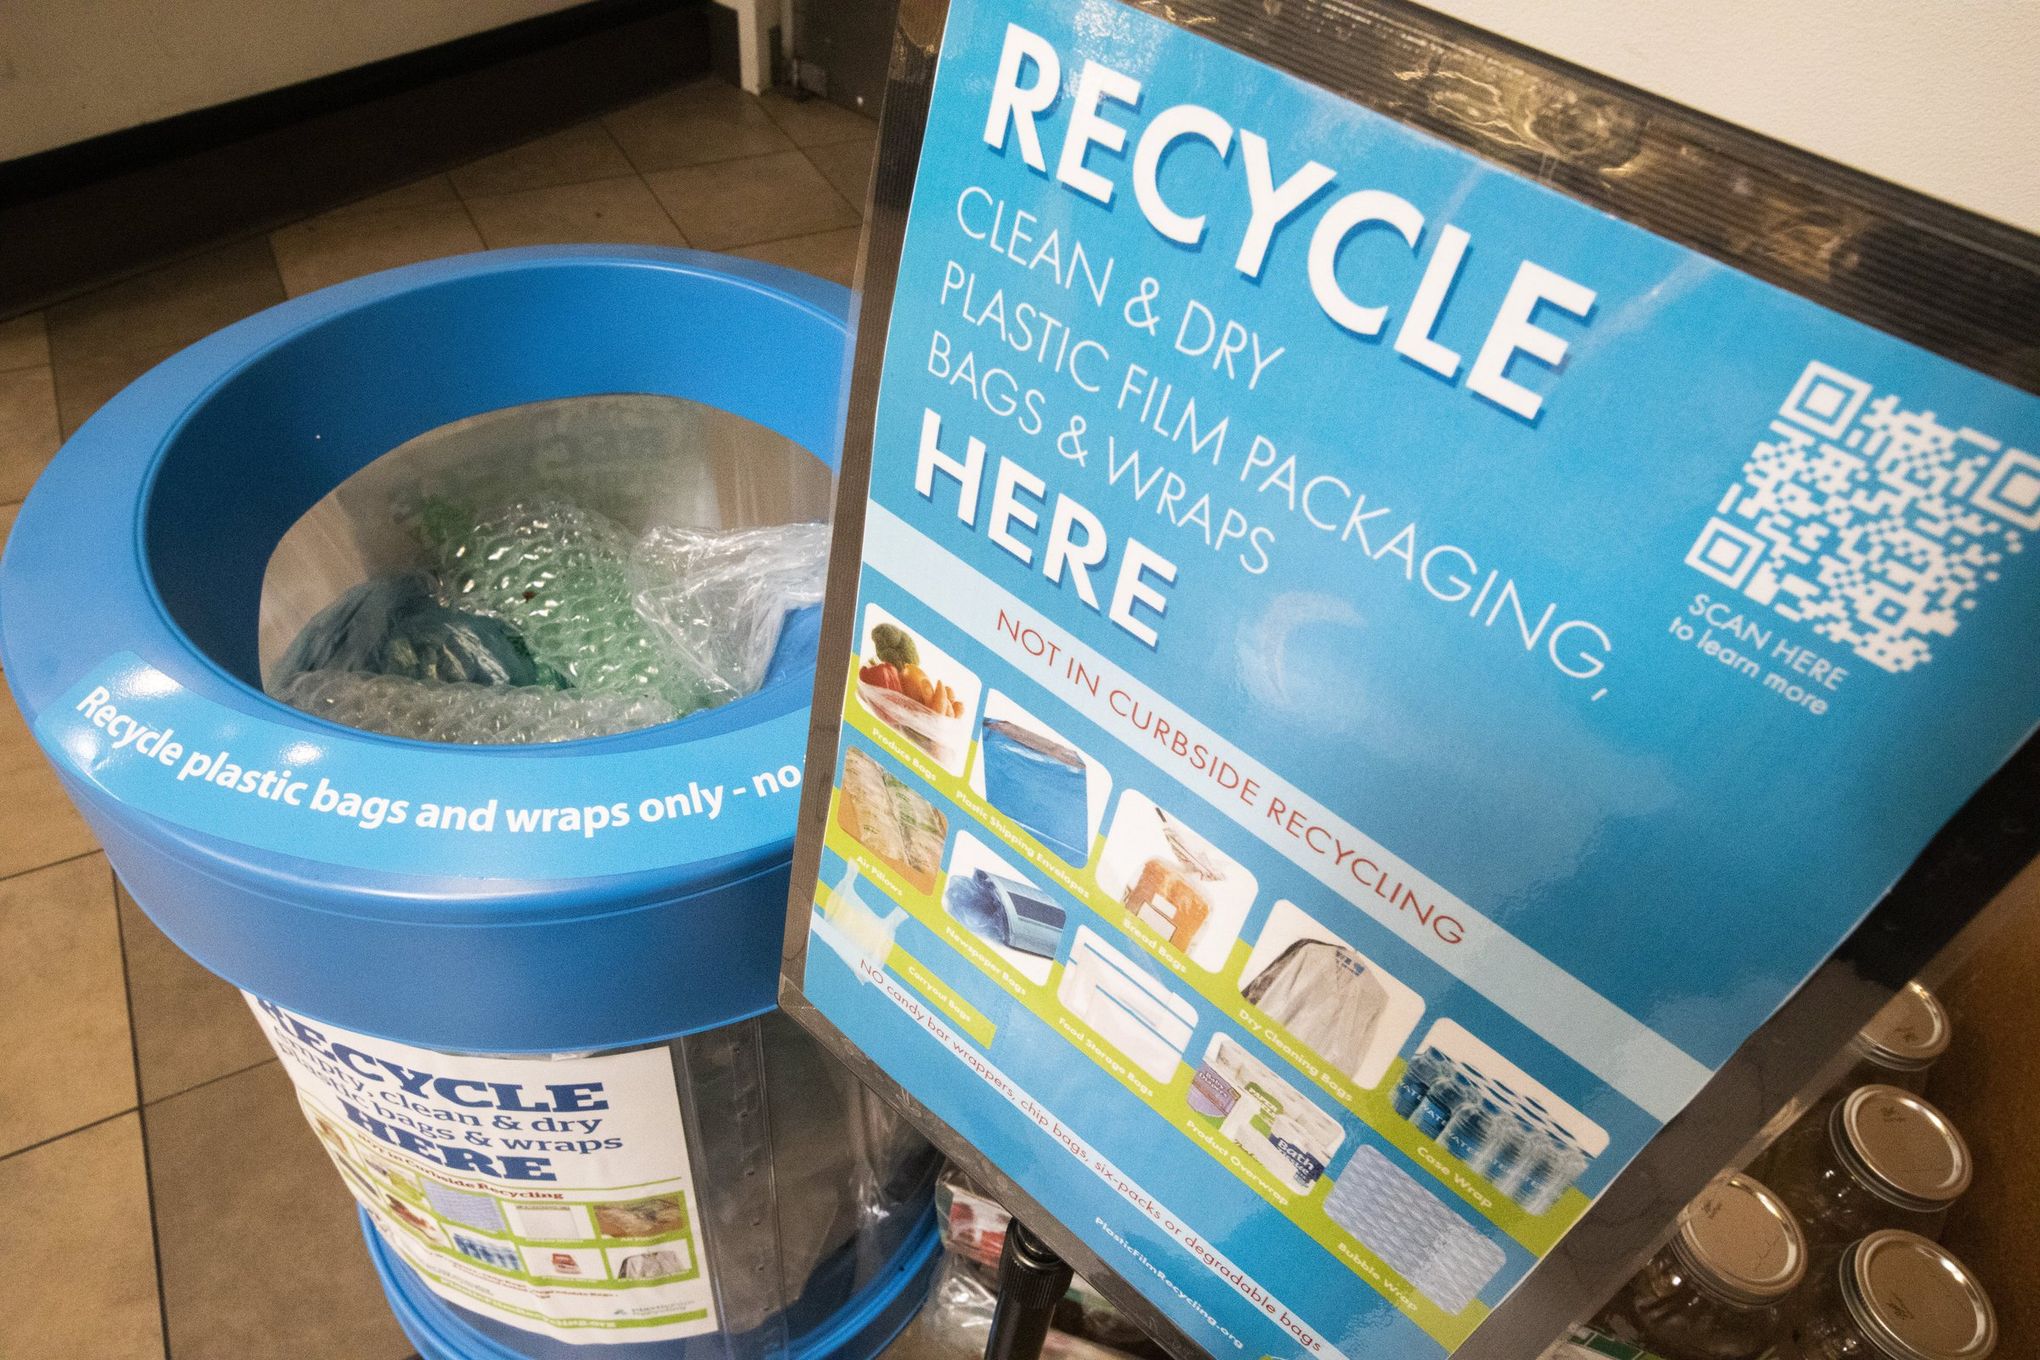 Plaintiff drops case over Hefty Recycling bag marketing